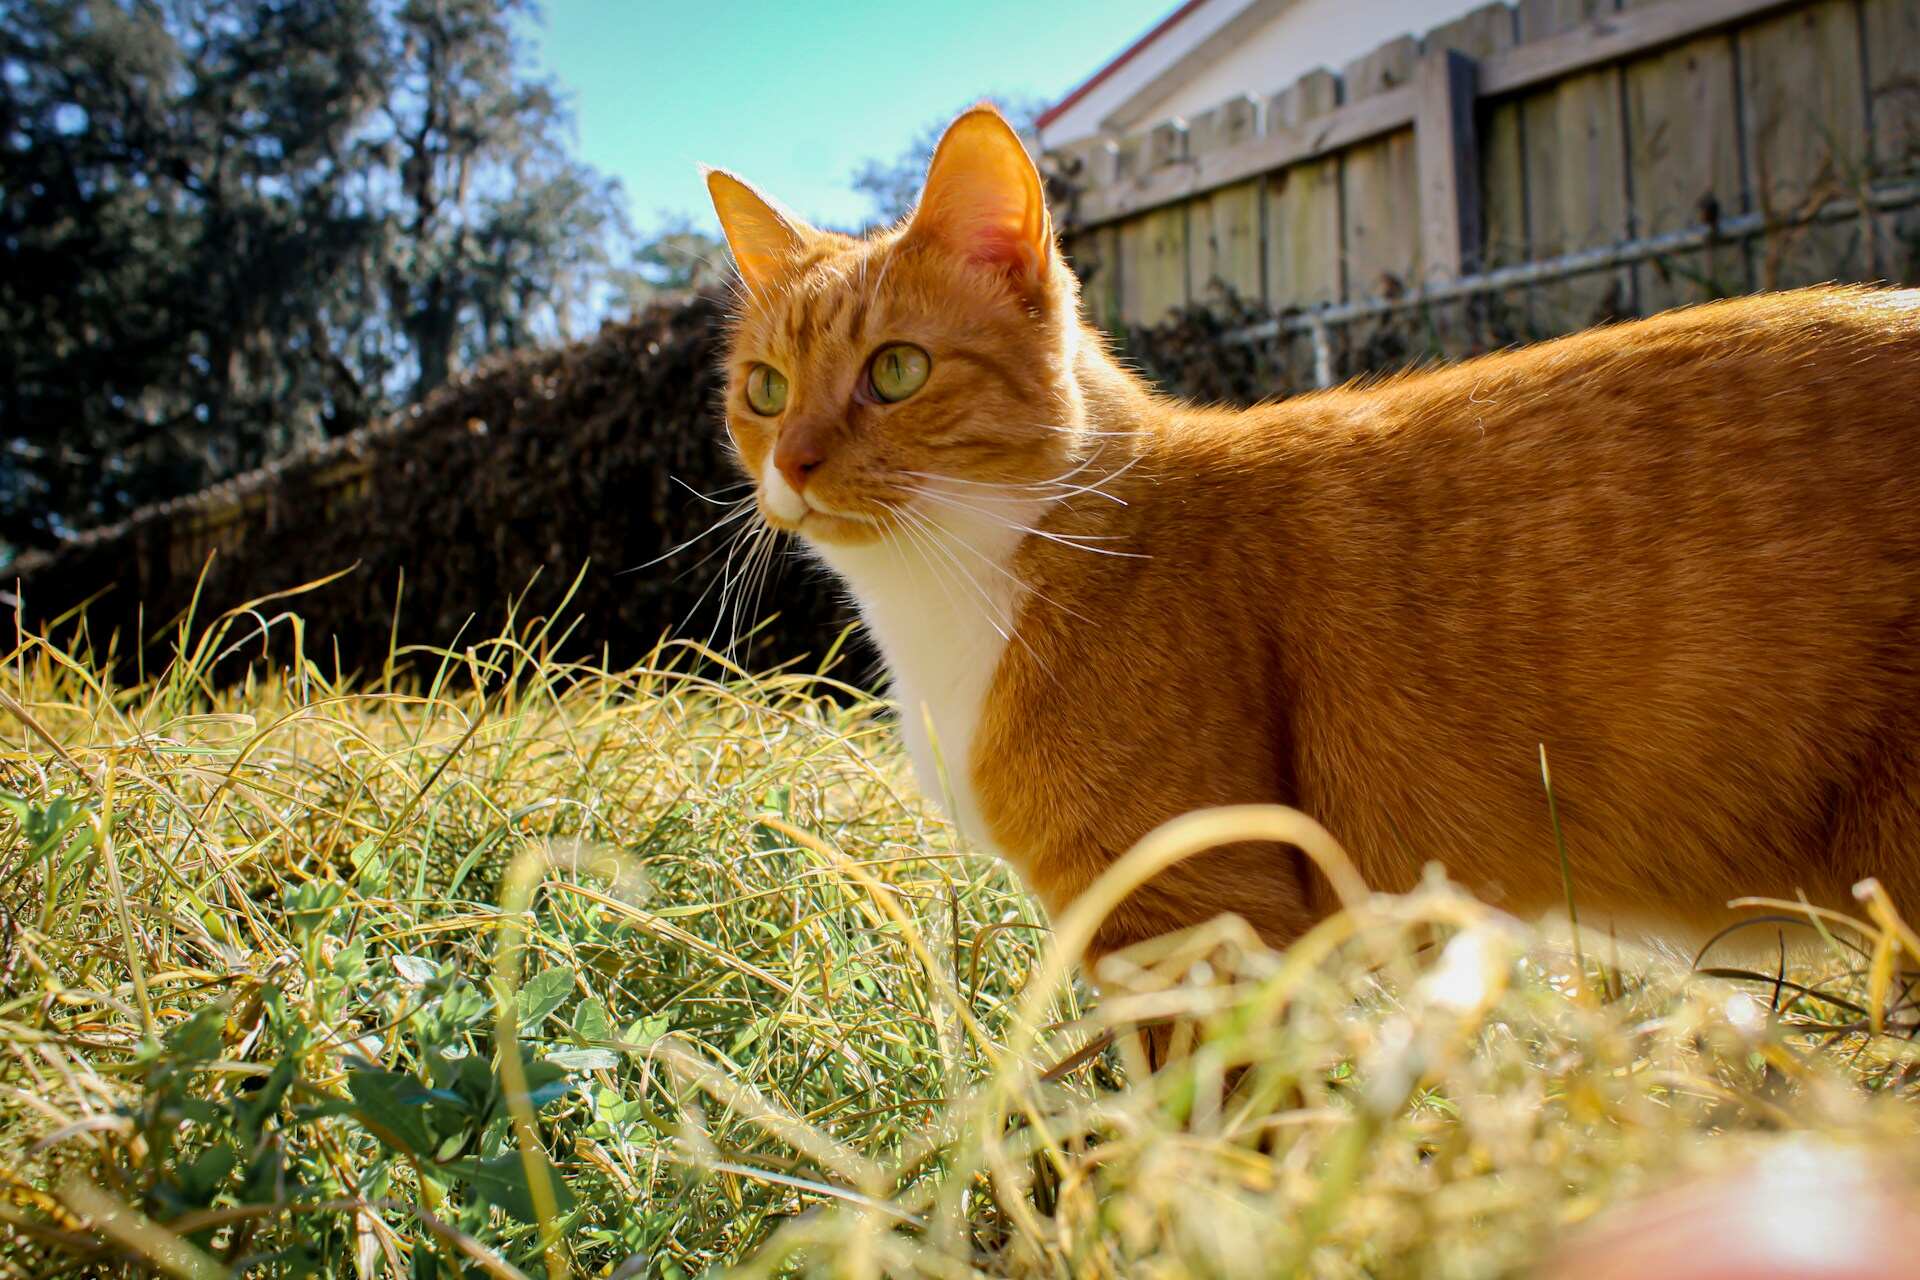 An orange cat exploring a sunny field outdoors